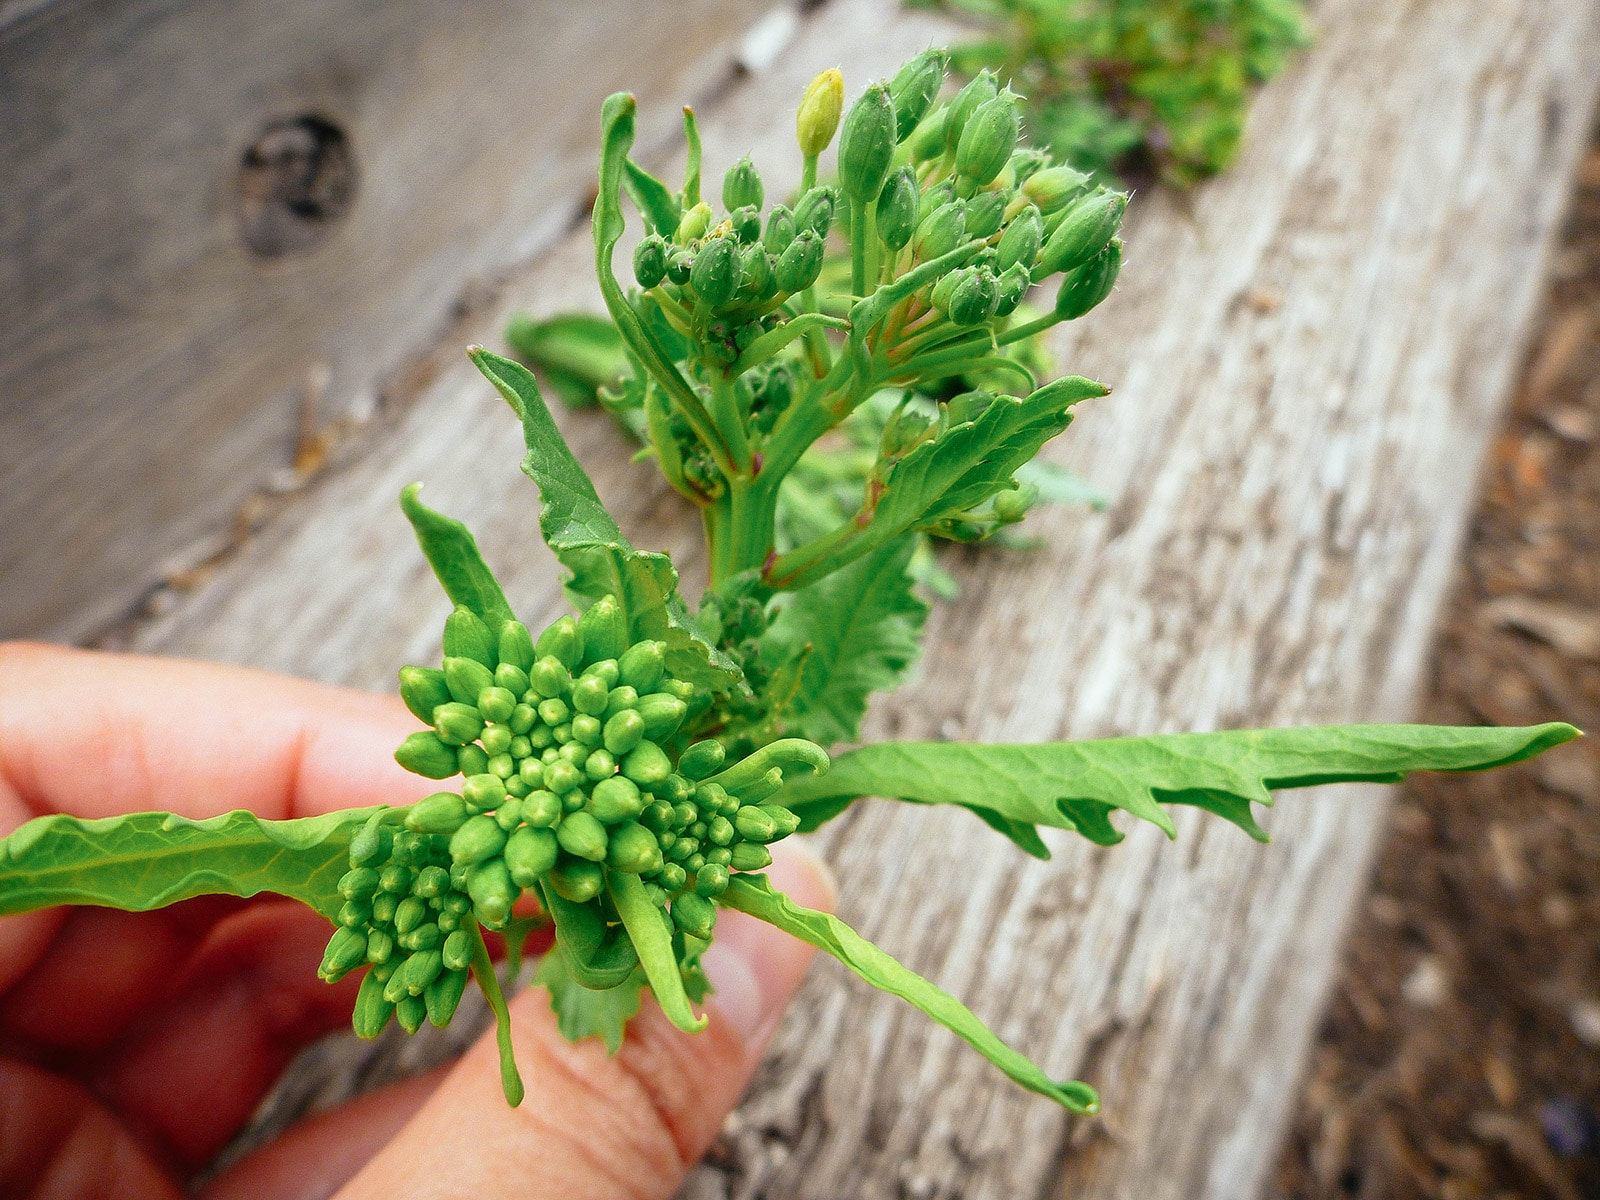 Hand holding a stem of kale florets